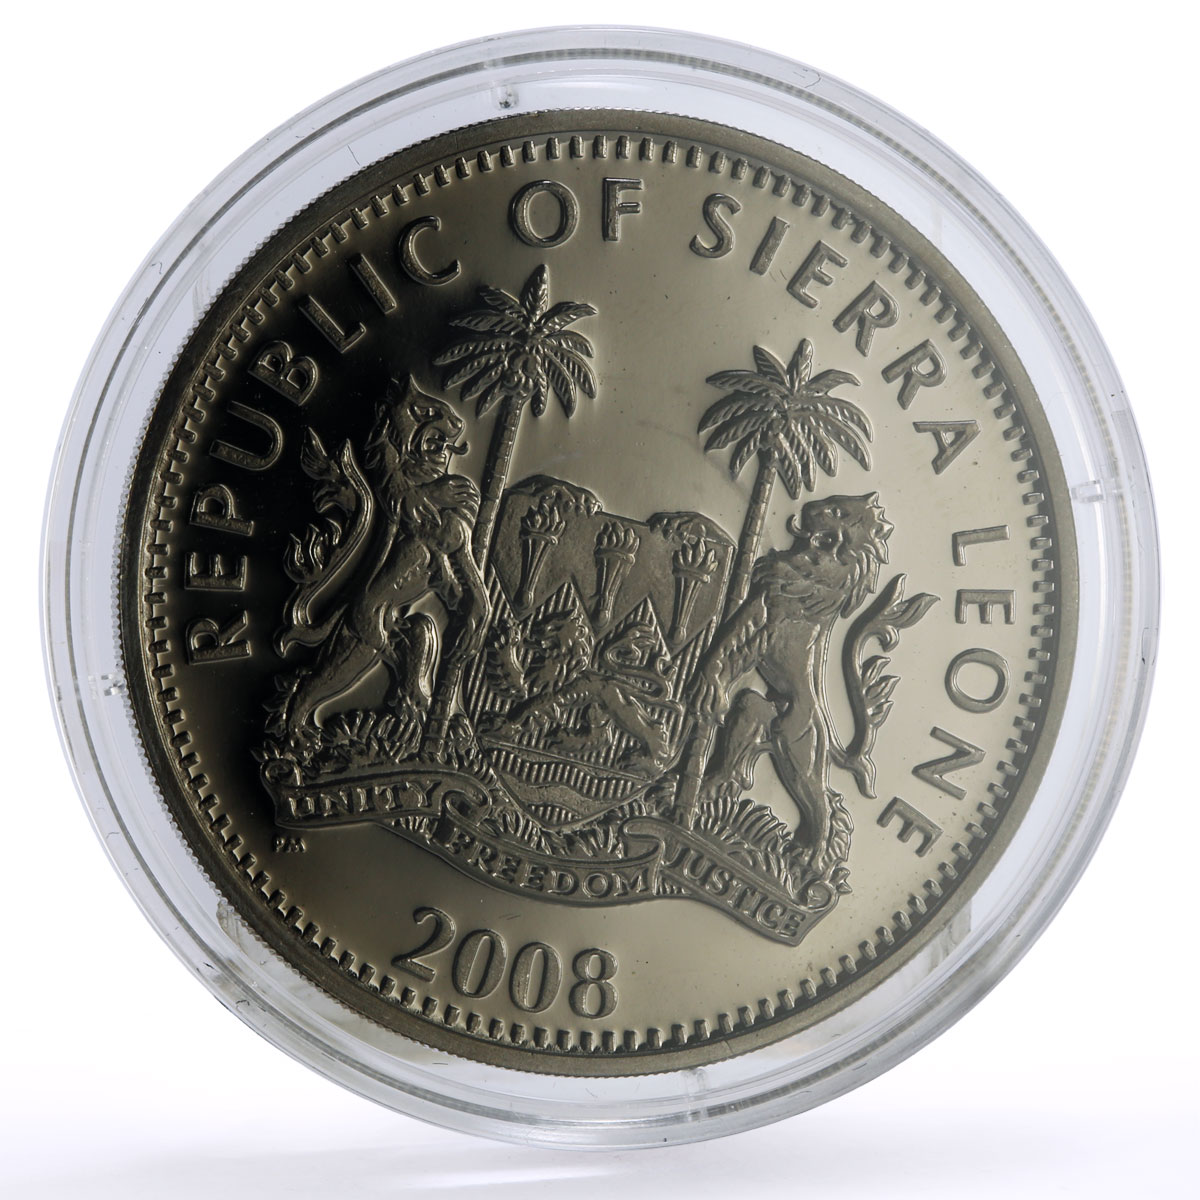 Sierra Leone set of 4 coins Wildlife Nocturnal Animals Fauna silver coins 2008